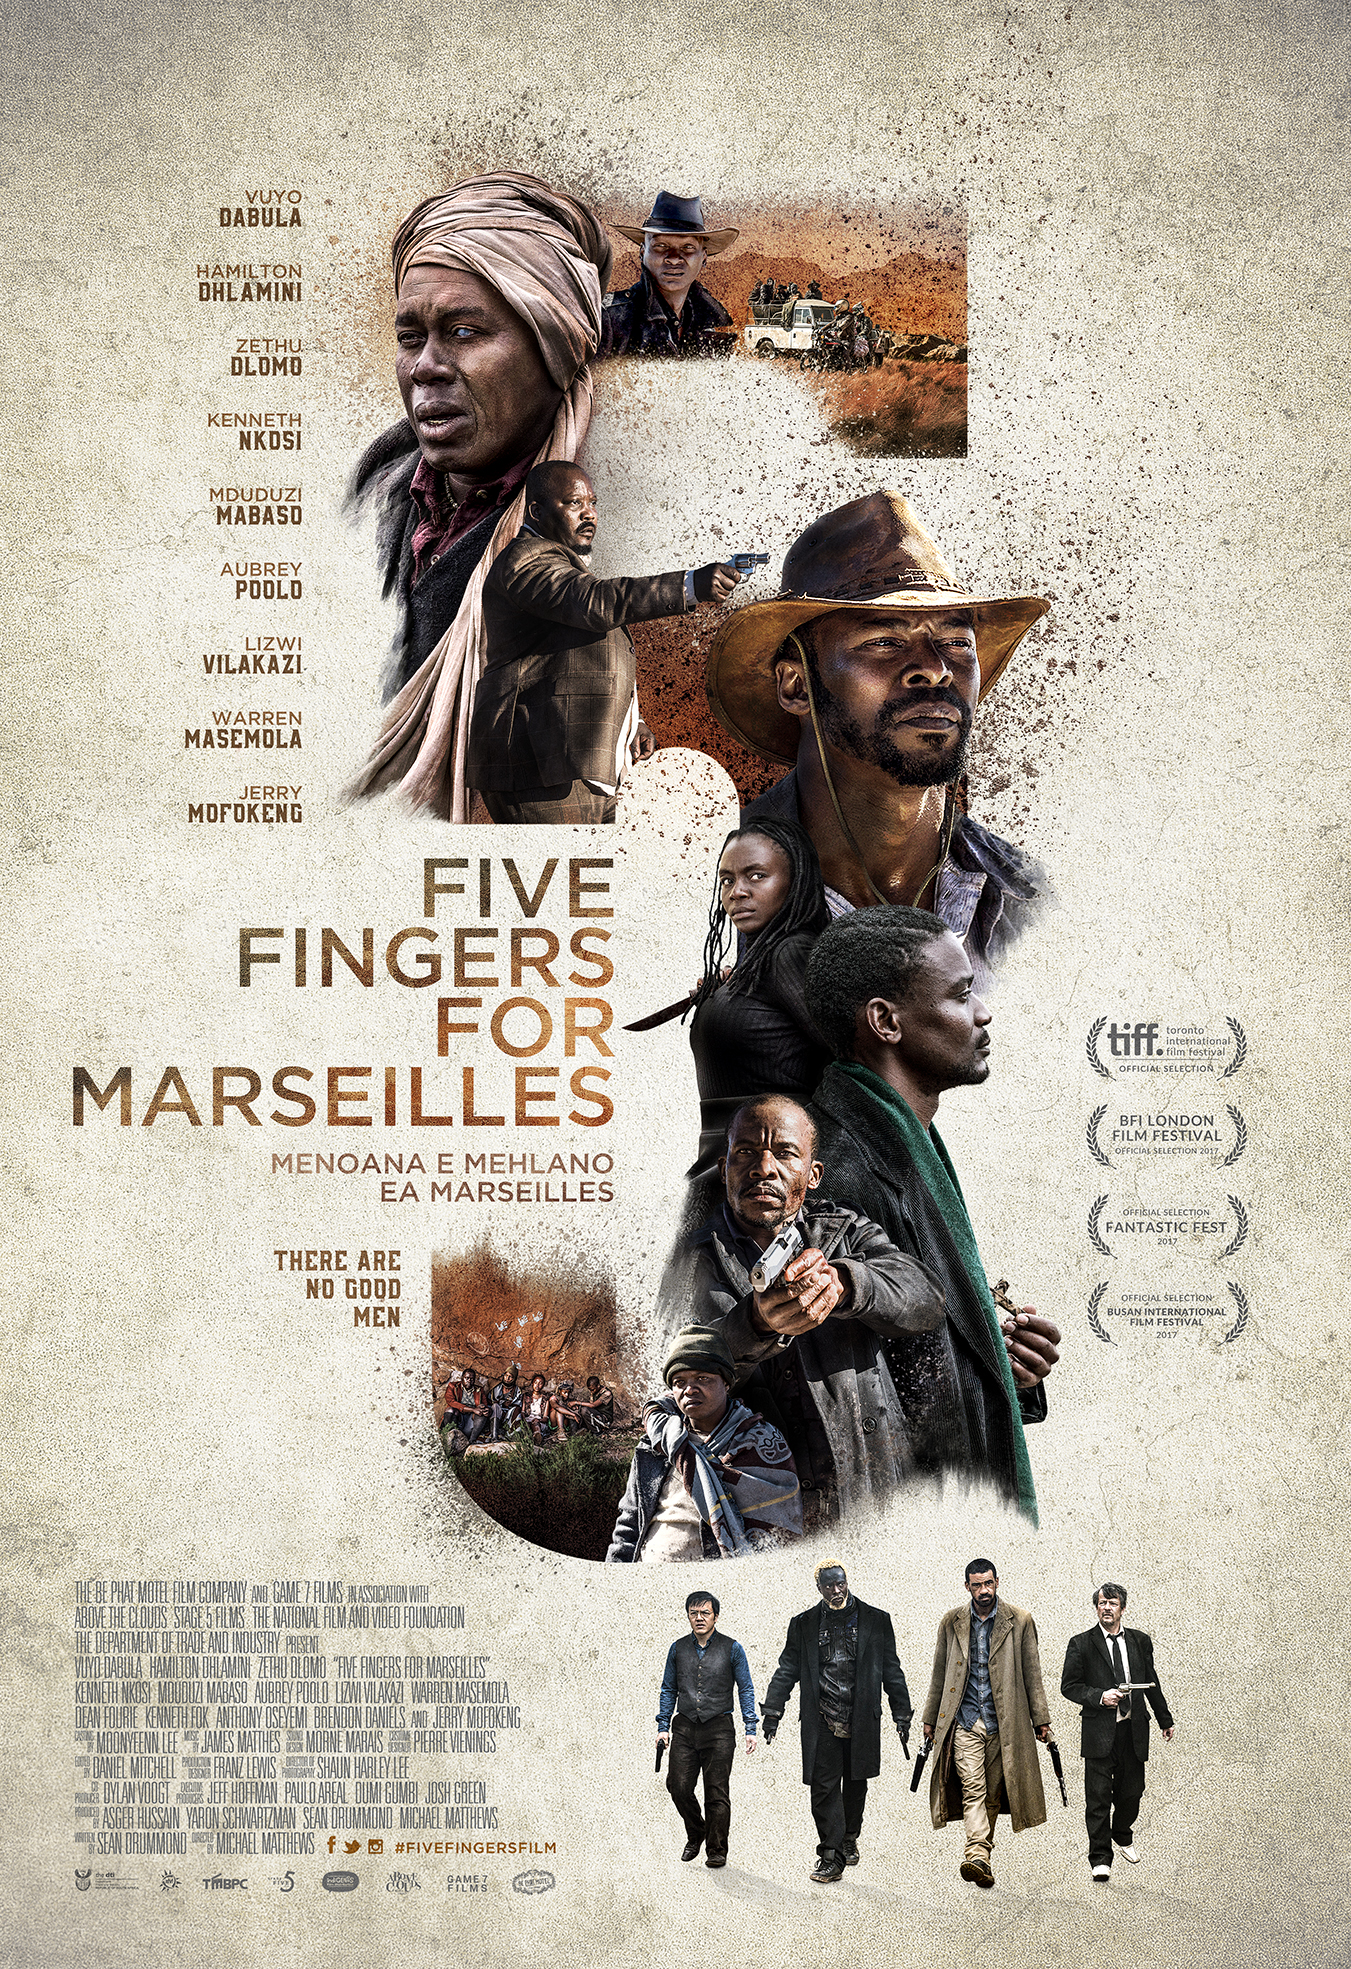 Nonton film Five Fingers for Marseilles layarkaca21 indoxx1 ganool online streaming terbaru